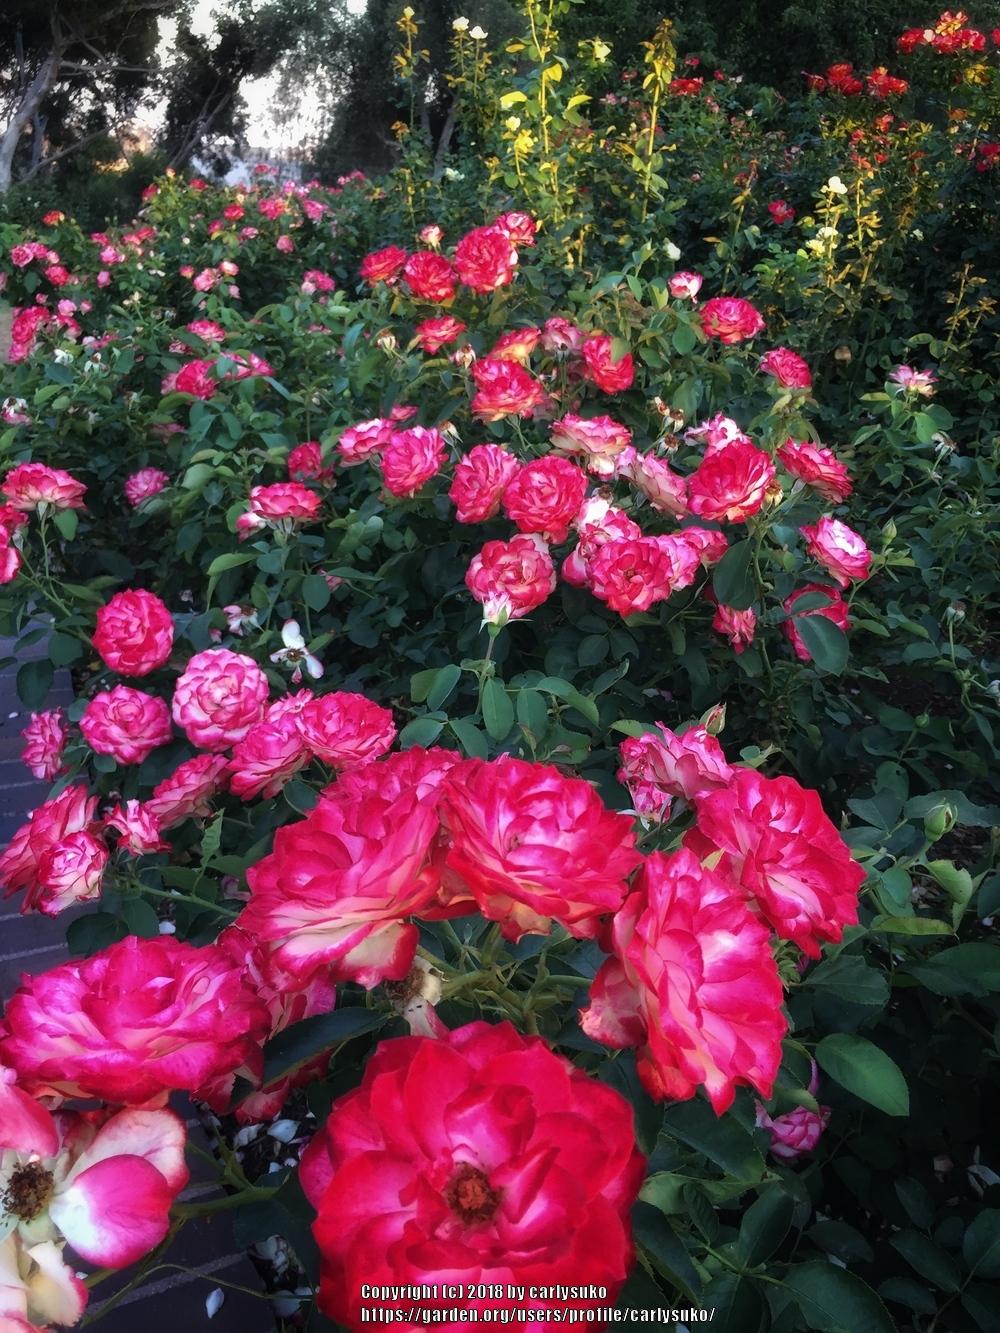 Photo of Rose (Rosa 'Cherry Parfait') uploaded by carlysuko